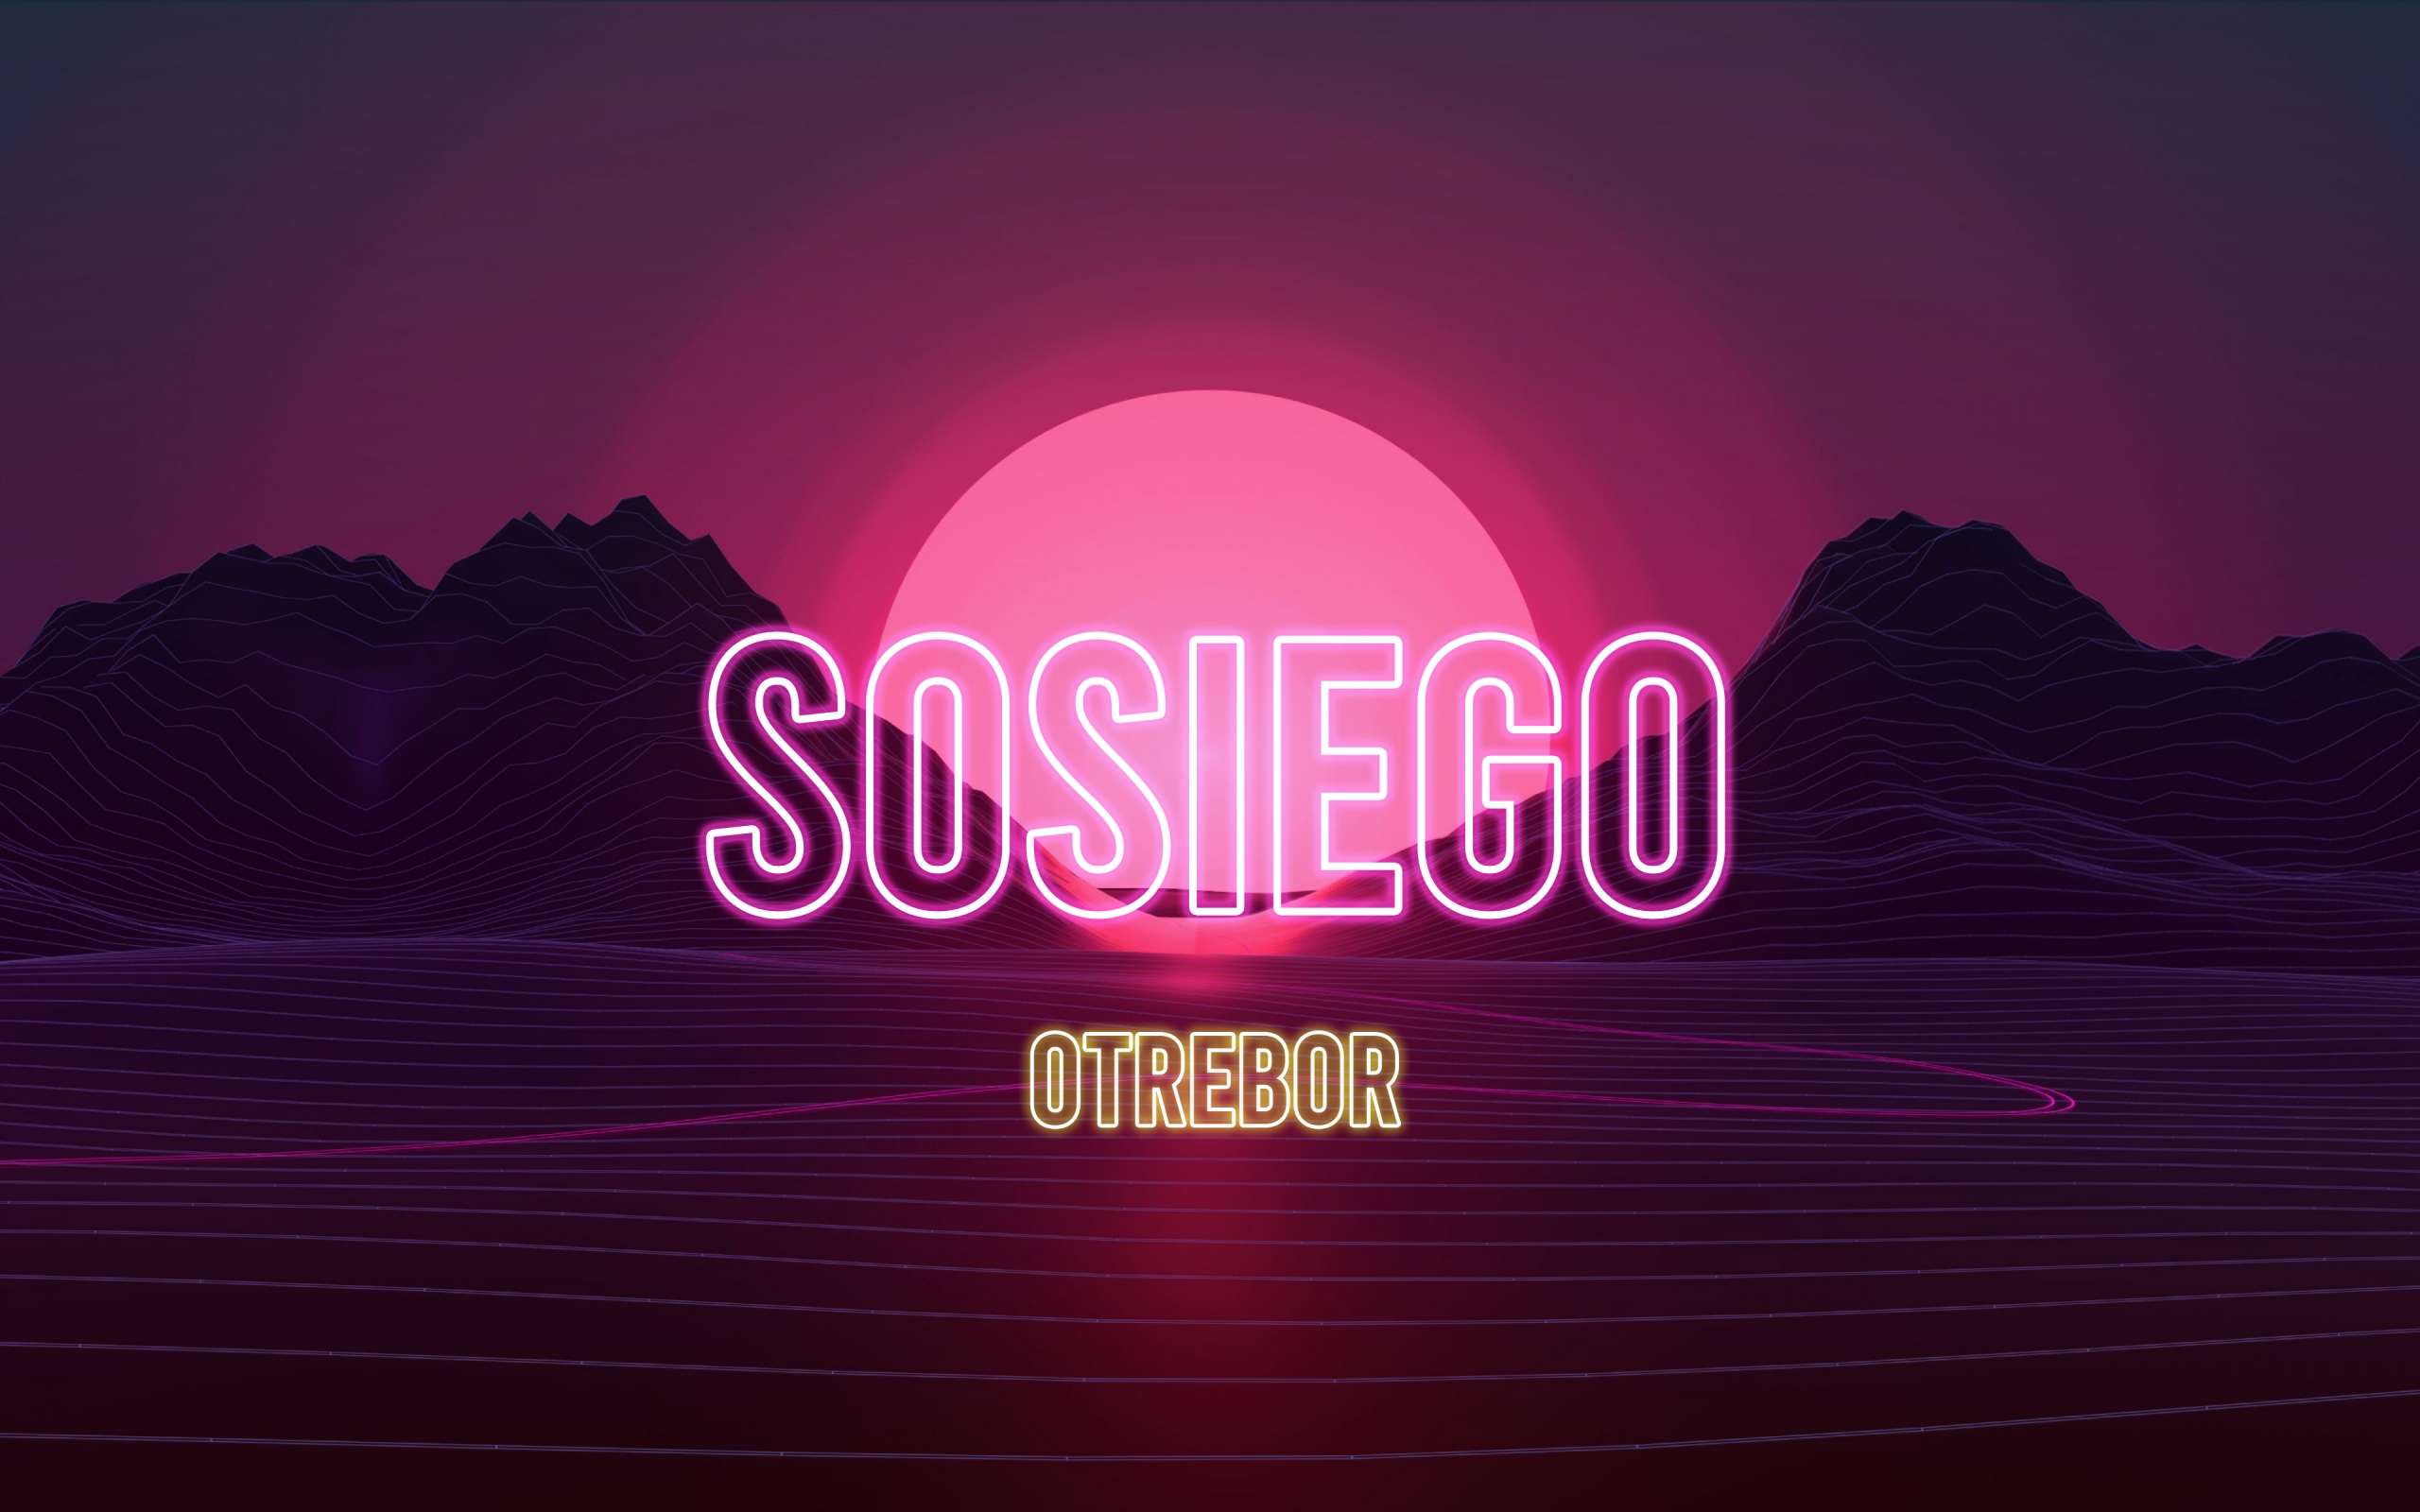 Otrebor revela su primer EP ‘Sosiego’